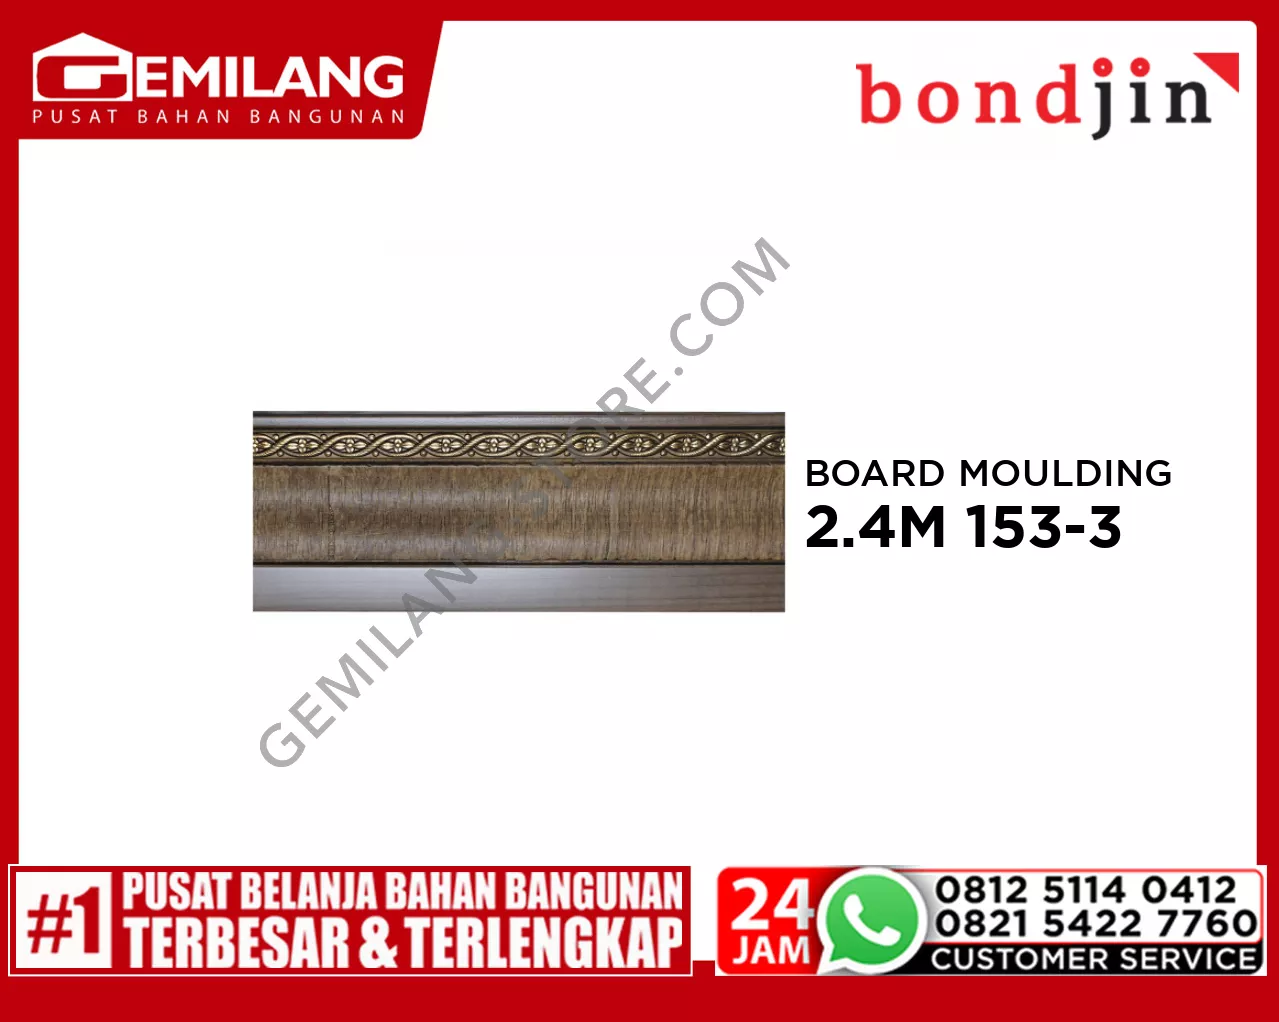 BONDJIN BOARD MOULDING 2.4M 153-3